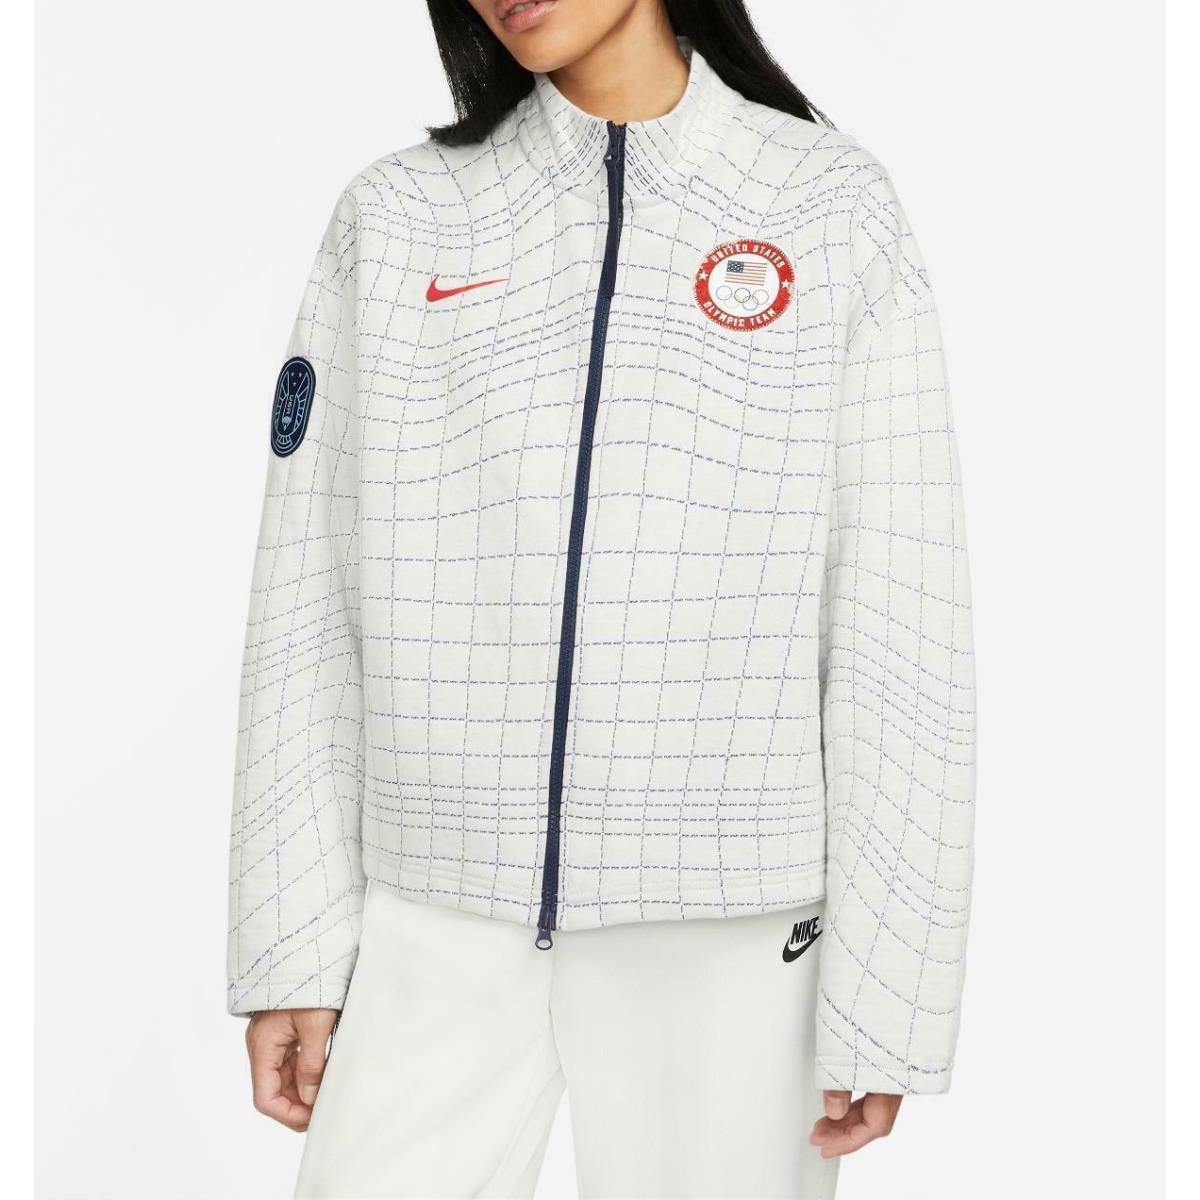 Nike Sportswear Jacket Womens Full Zip Team Usa Olympics White DJ5246 121